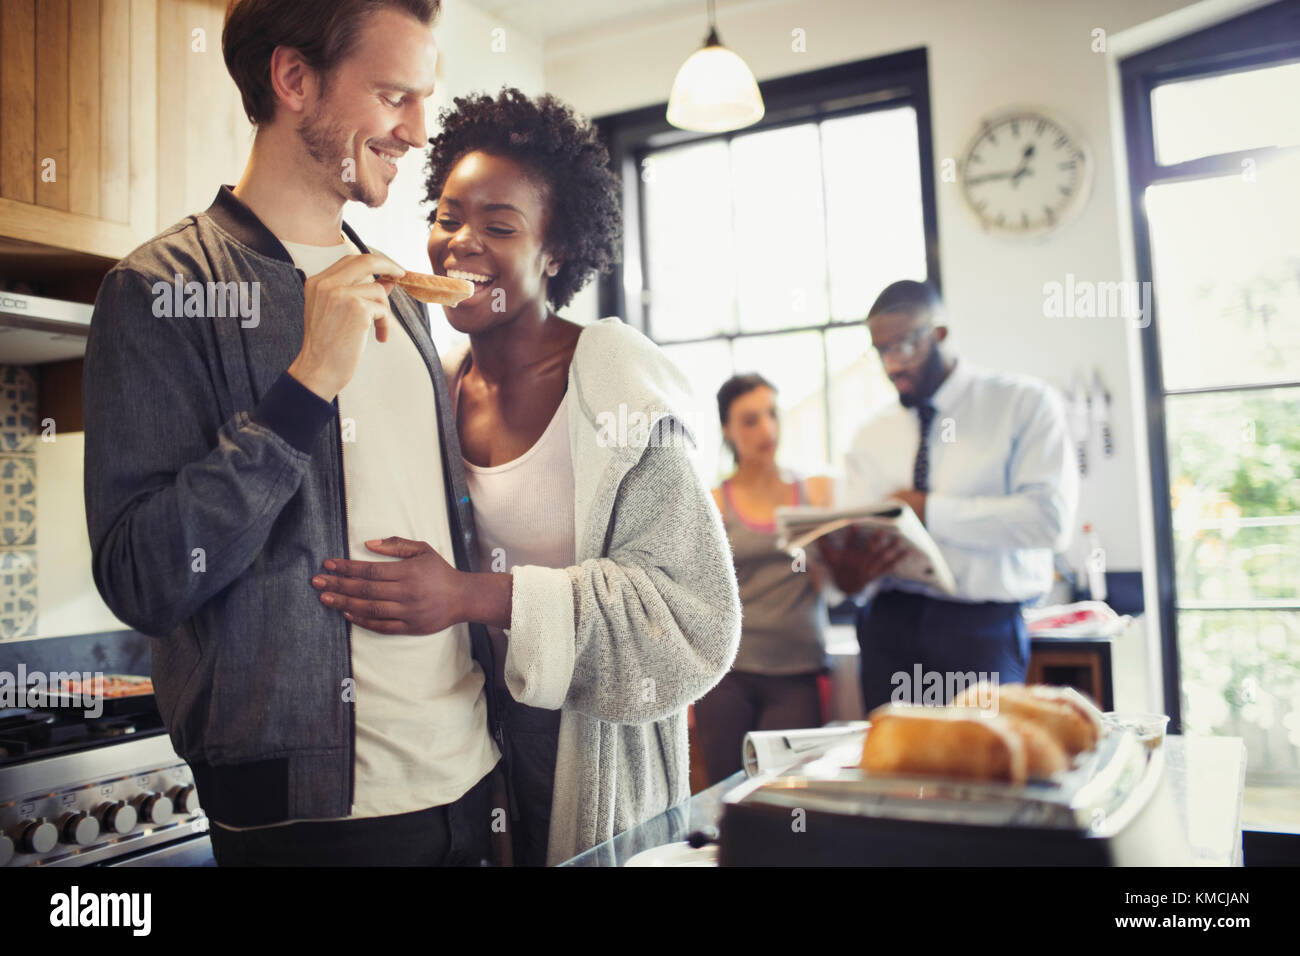 Boyfriend feeding toast to girlfriend in kitchen Stock Photo